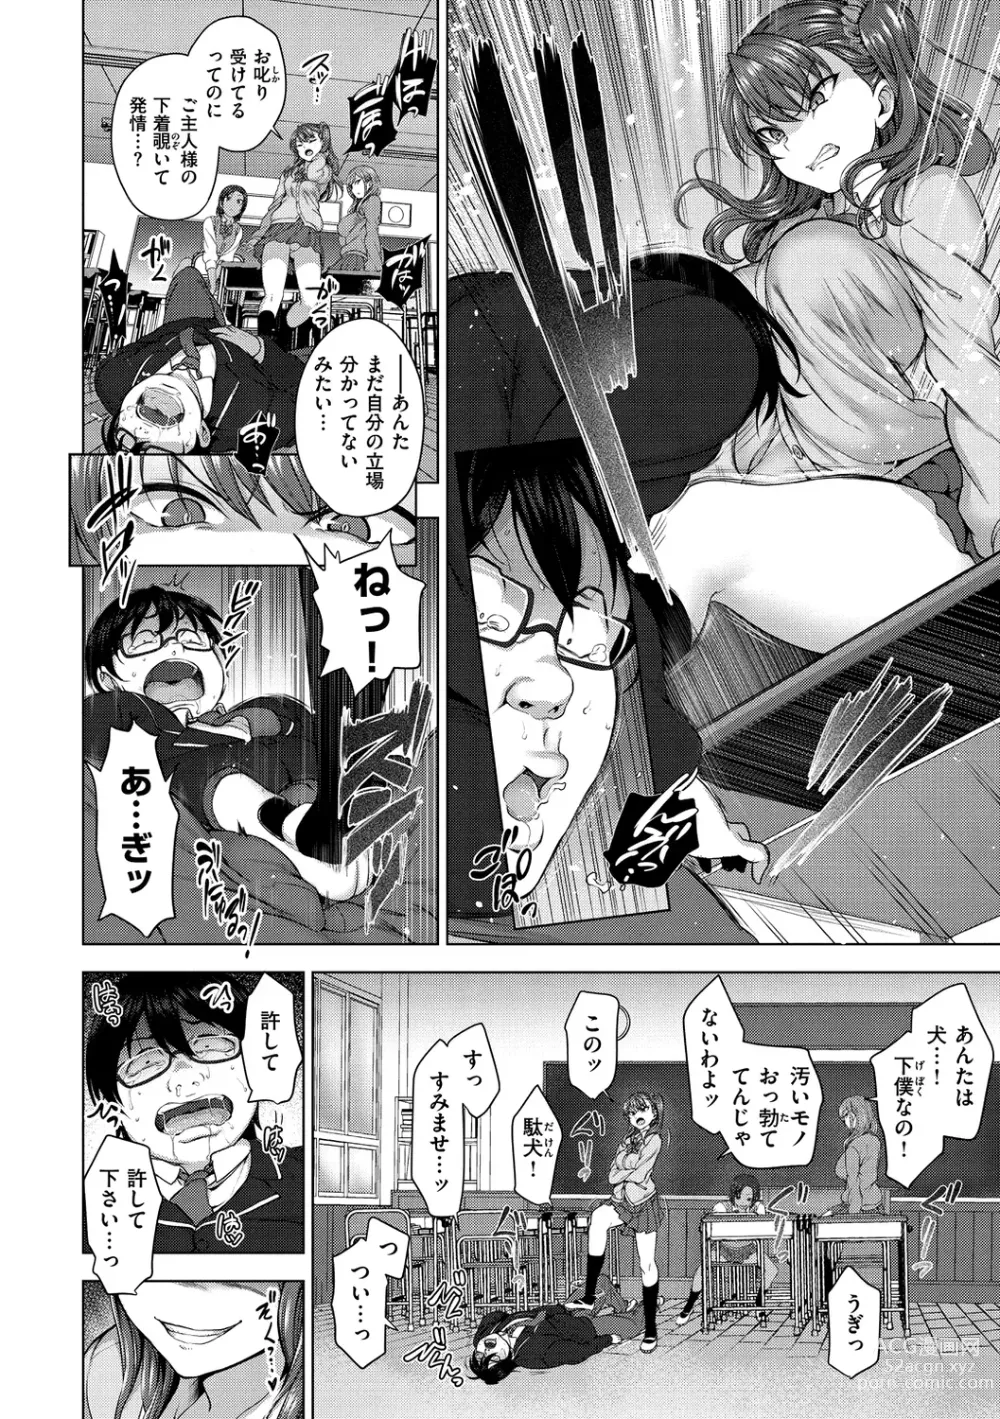 Page 8 of manga Ijirare